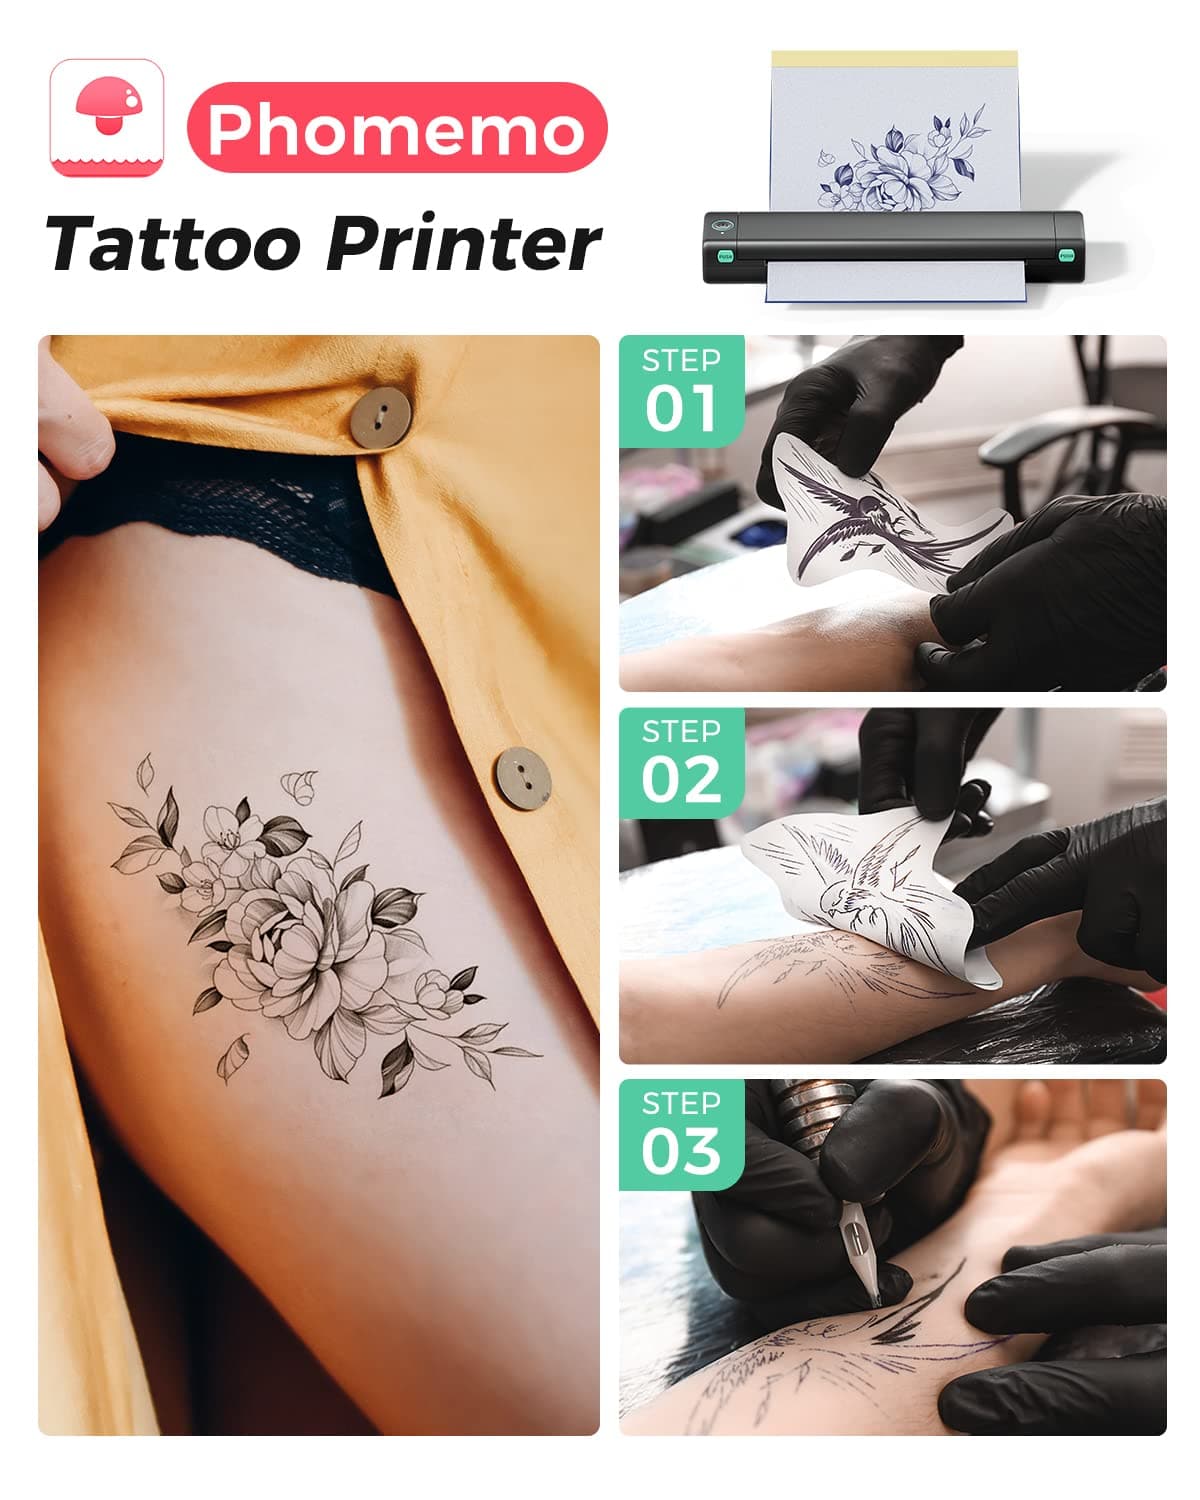 Itari M08F Wireless Tattoo Stencil-Printer - Tattoo Transfer Machine  Thermal Copier with 10pcs Transfer Paper, Bluetooth Stencial Printer for